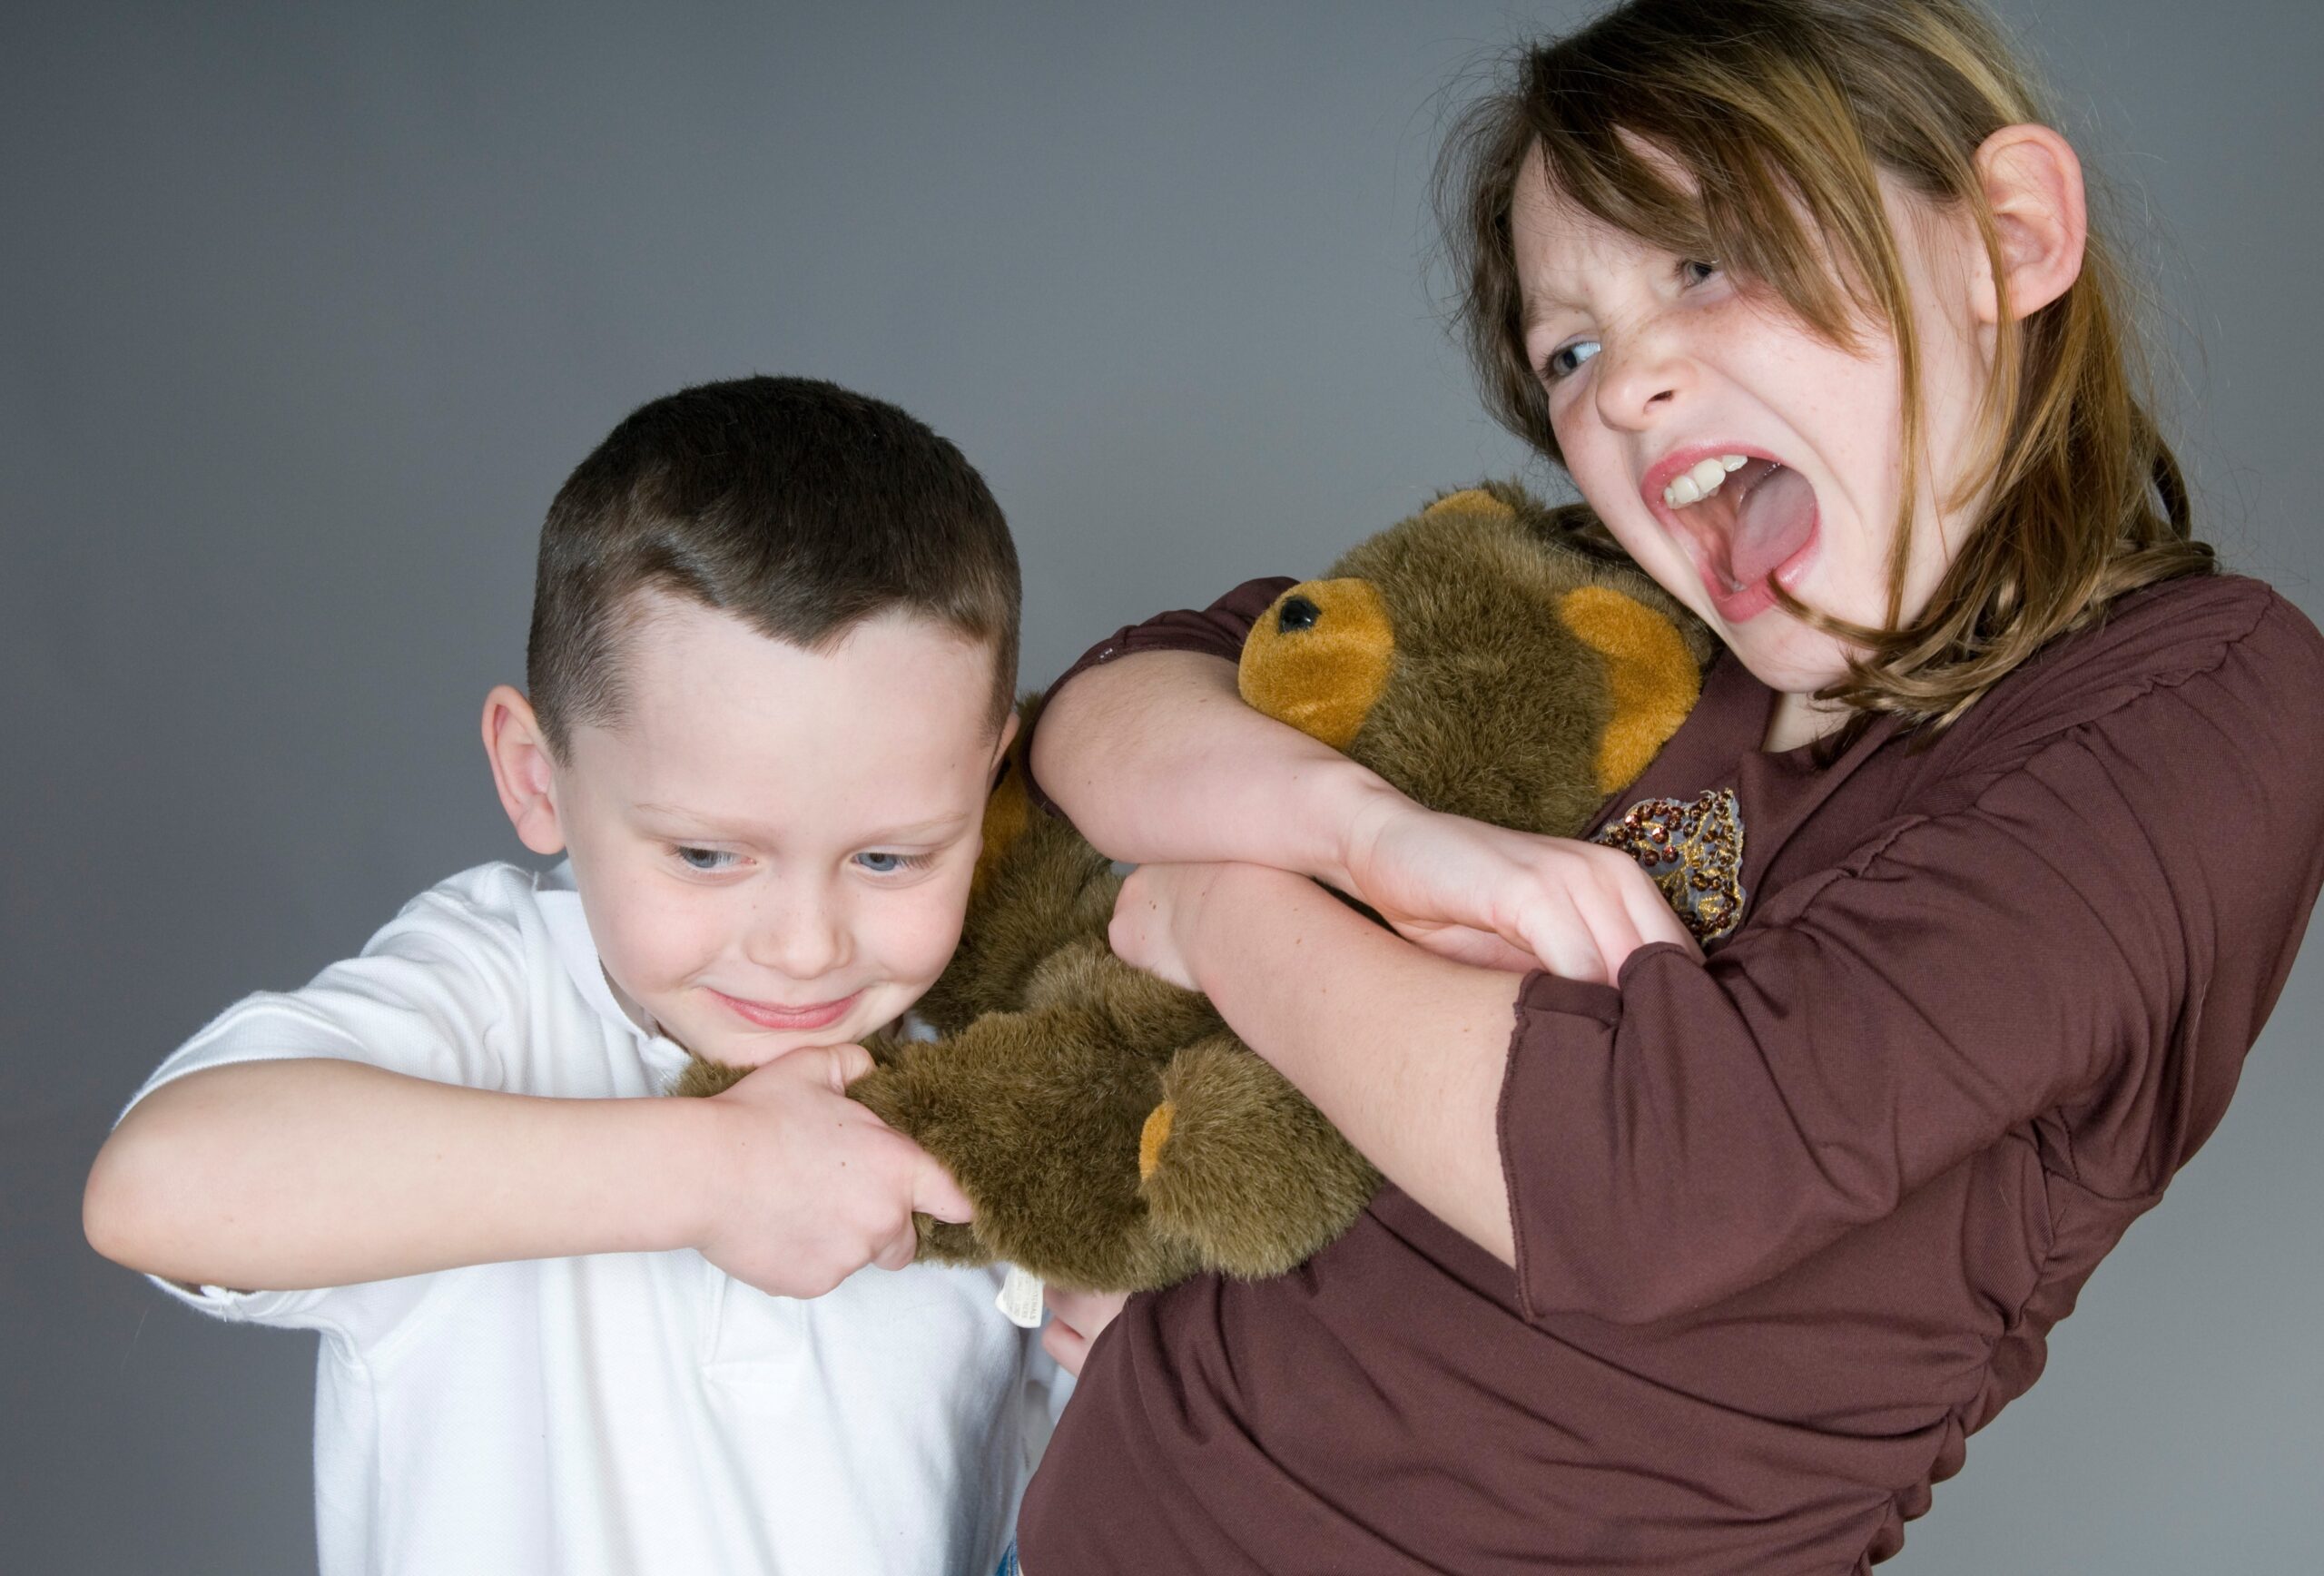 Boy and girl fighting over teddy bear